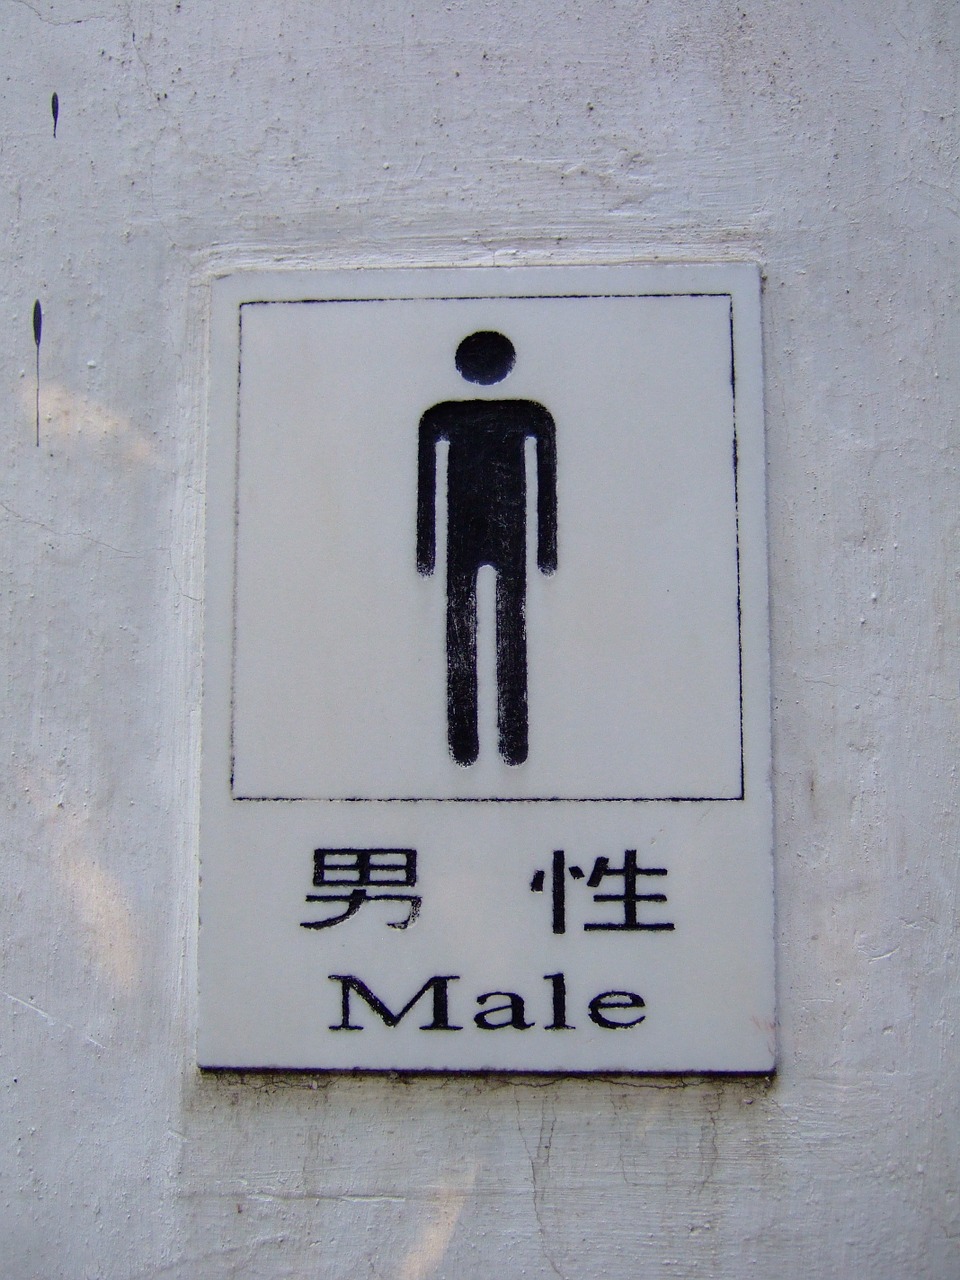 male toilet sign free photo